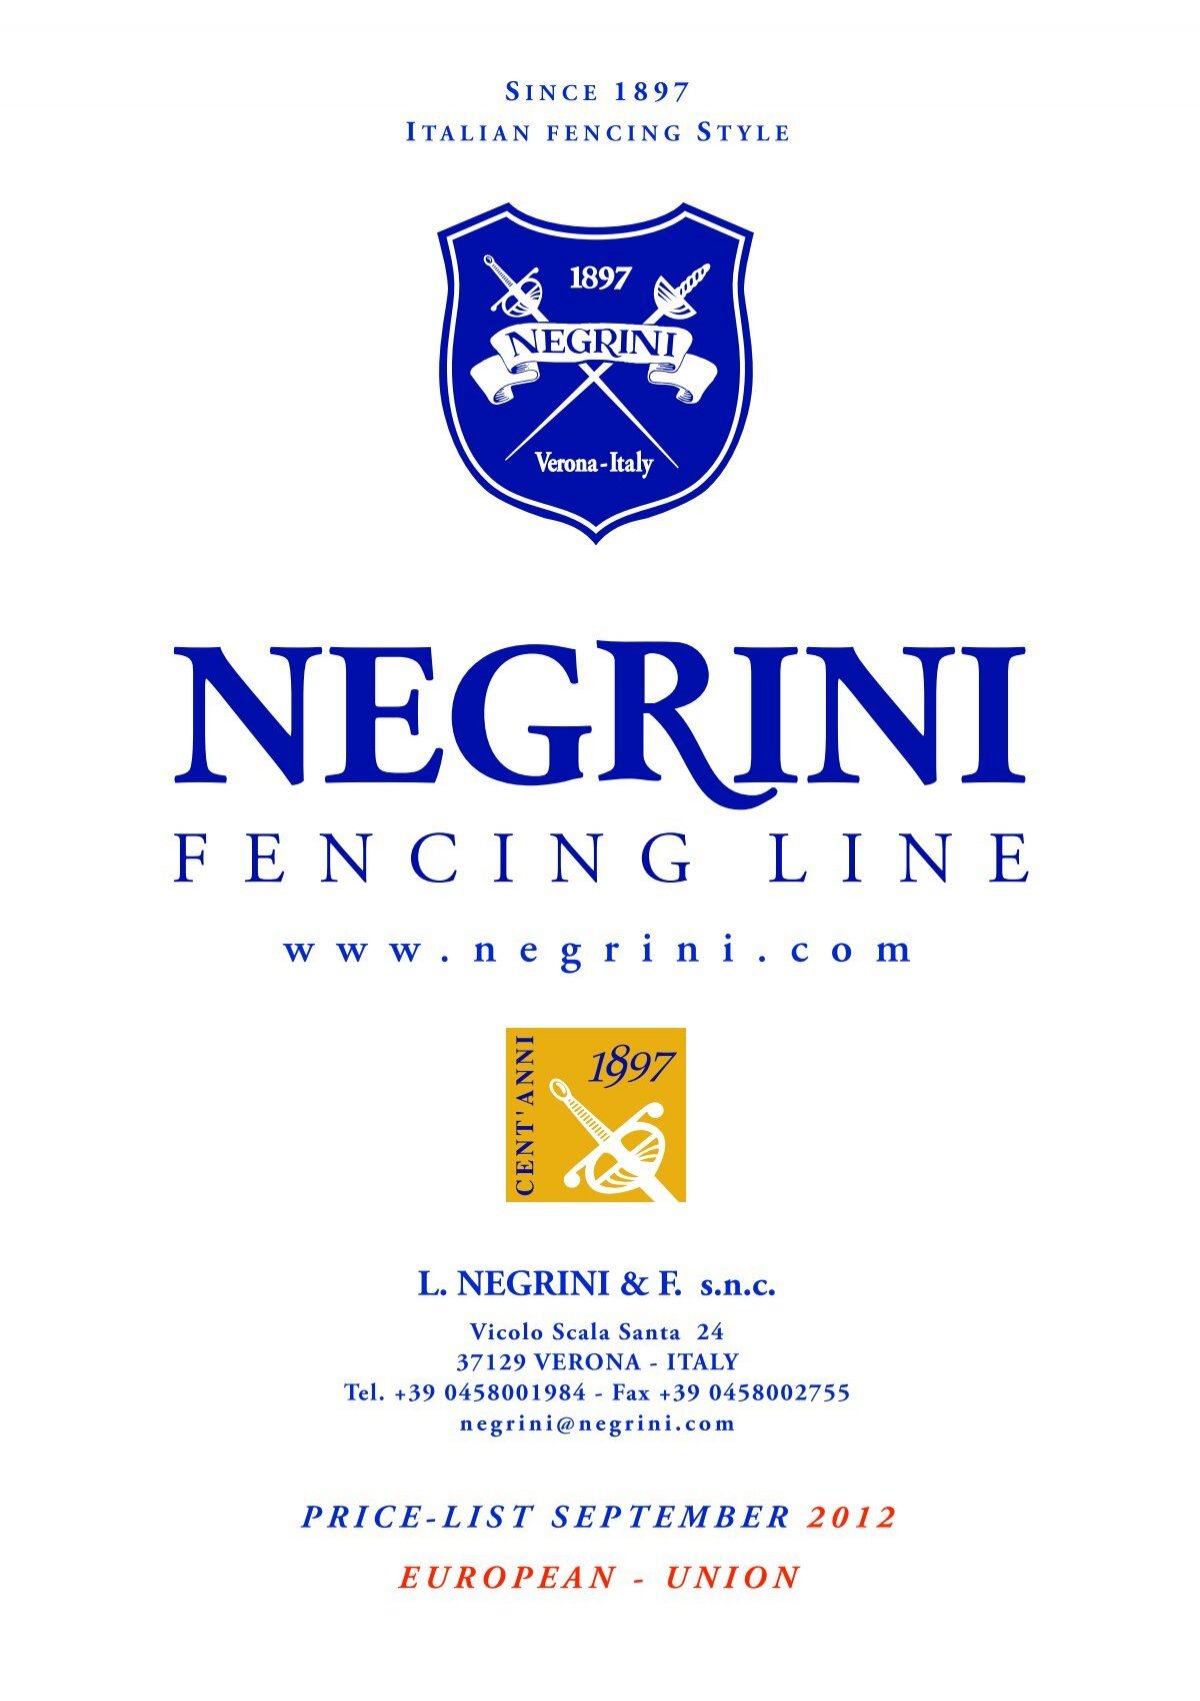 negrini's eu price list - Negrini Fencing Line